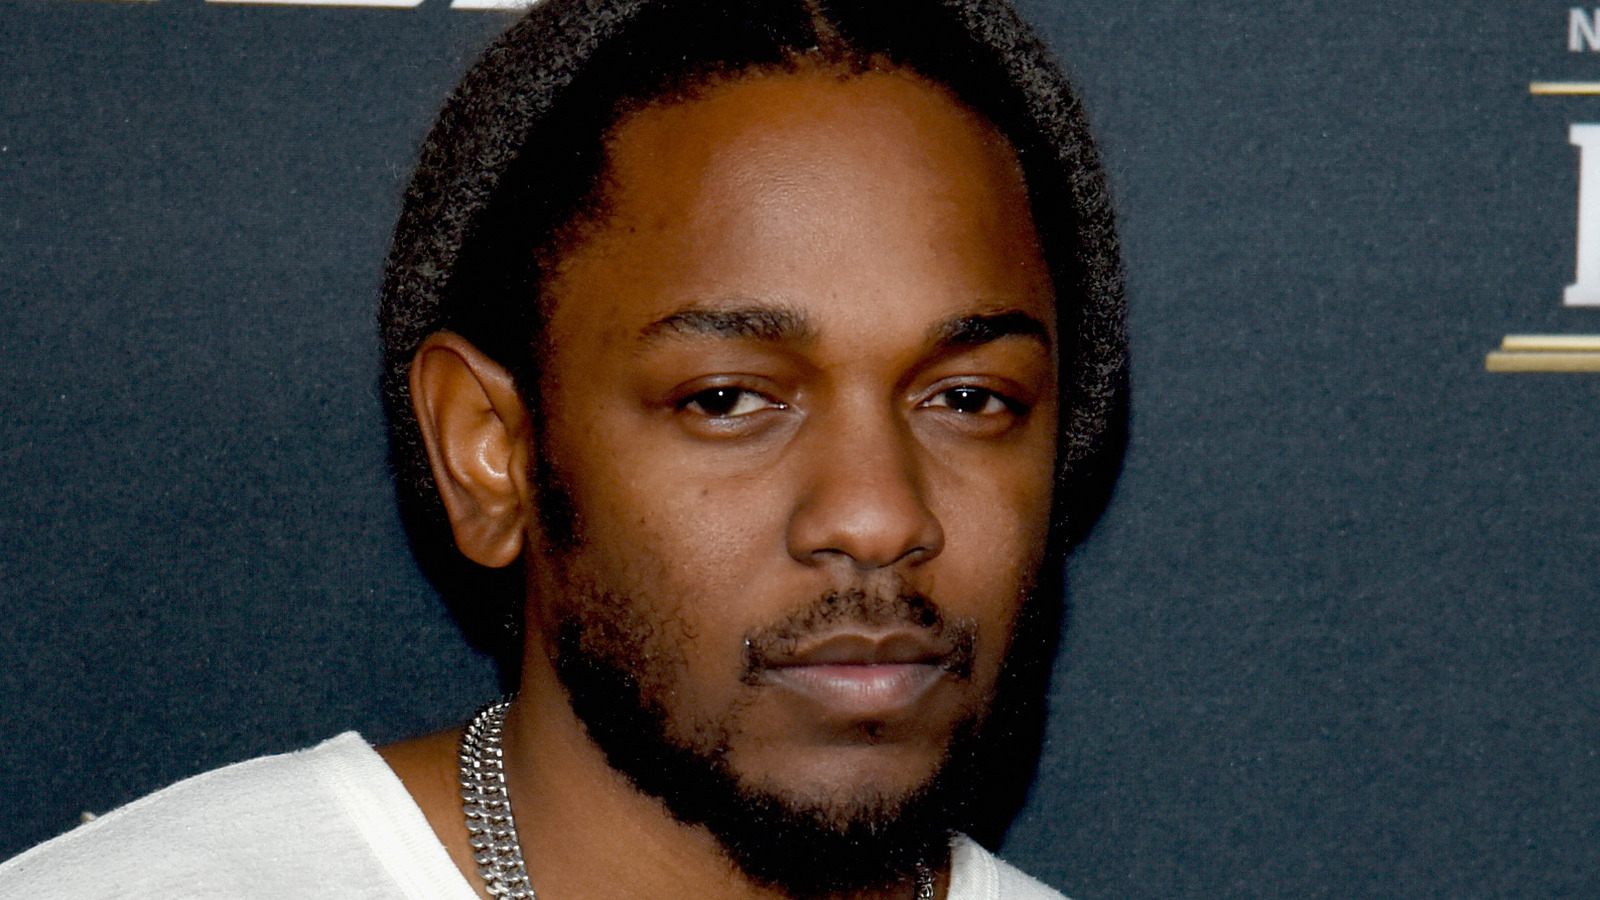 Kendrick Lamar's 'DNA.' Inspires Characters In Ruffles Super Bowl Ad